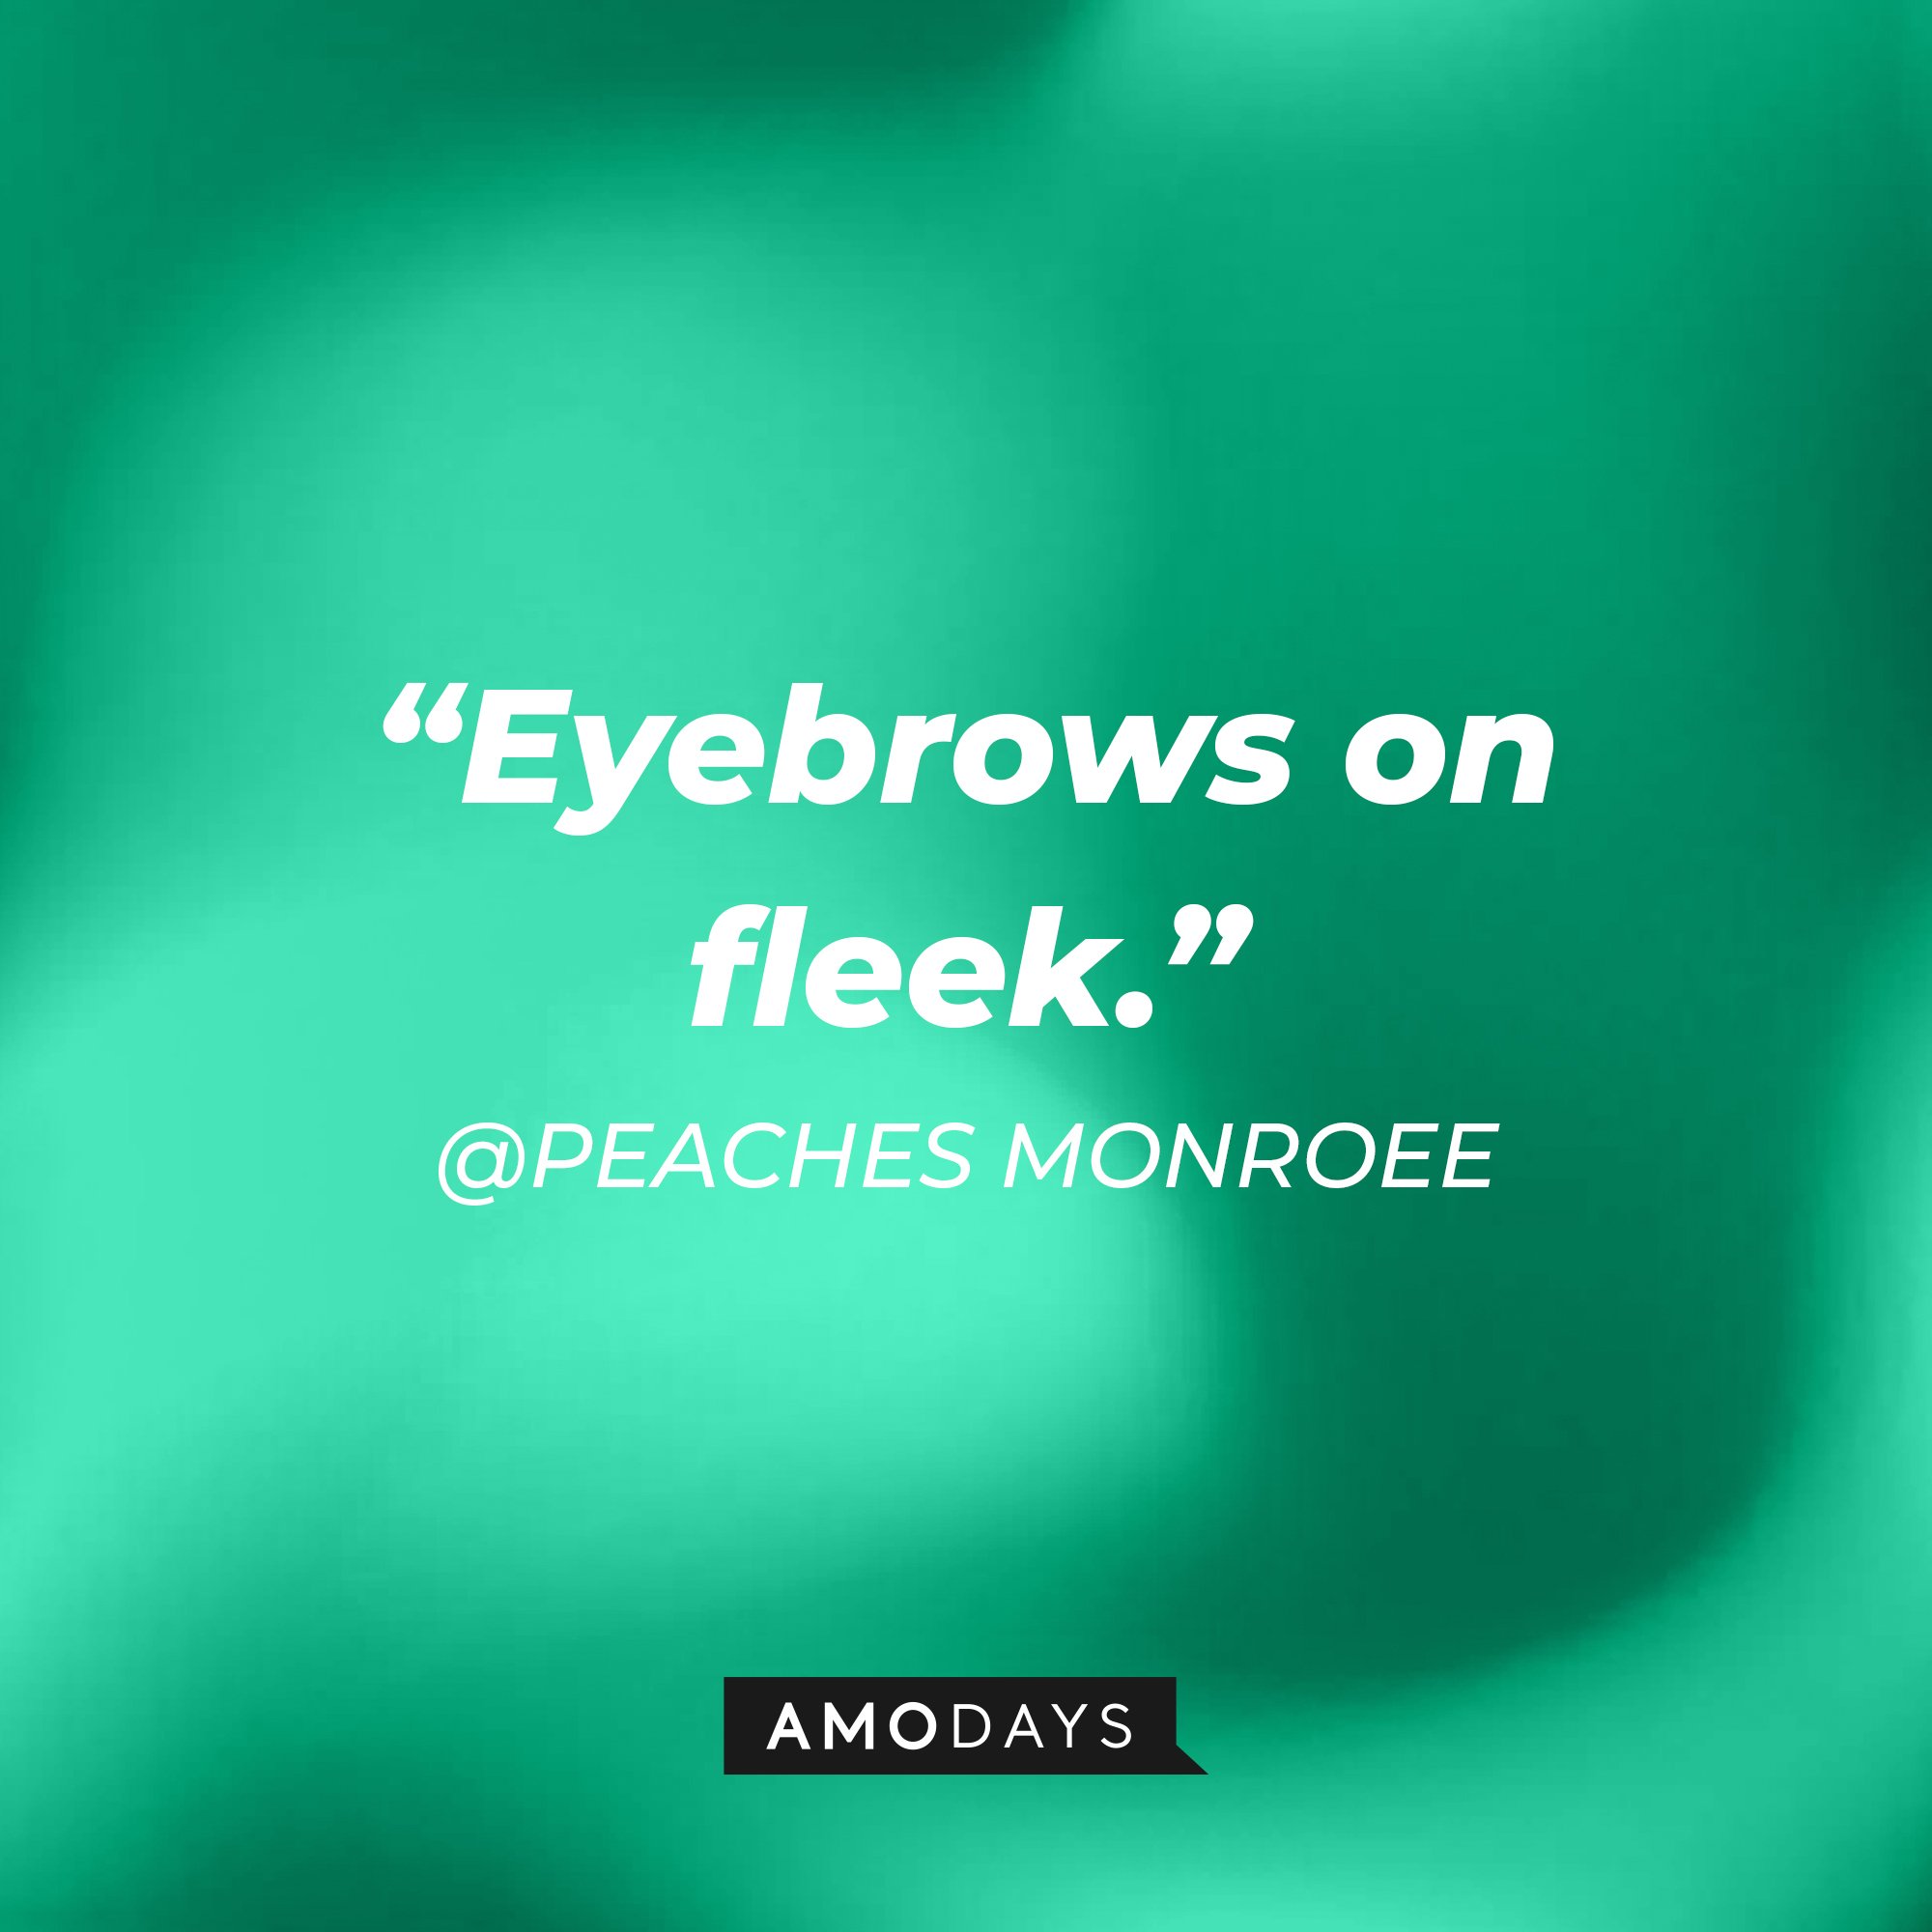 @PEACHES MONROEE's quote: “Eyebrows on fleek.” | Image: AmoDays